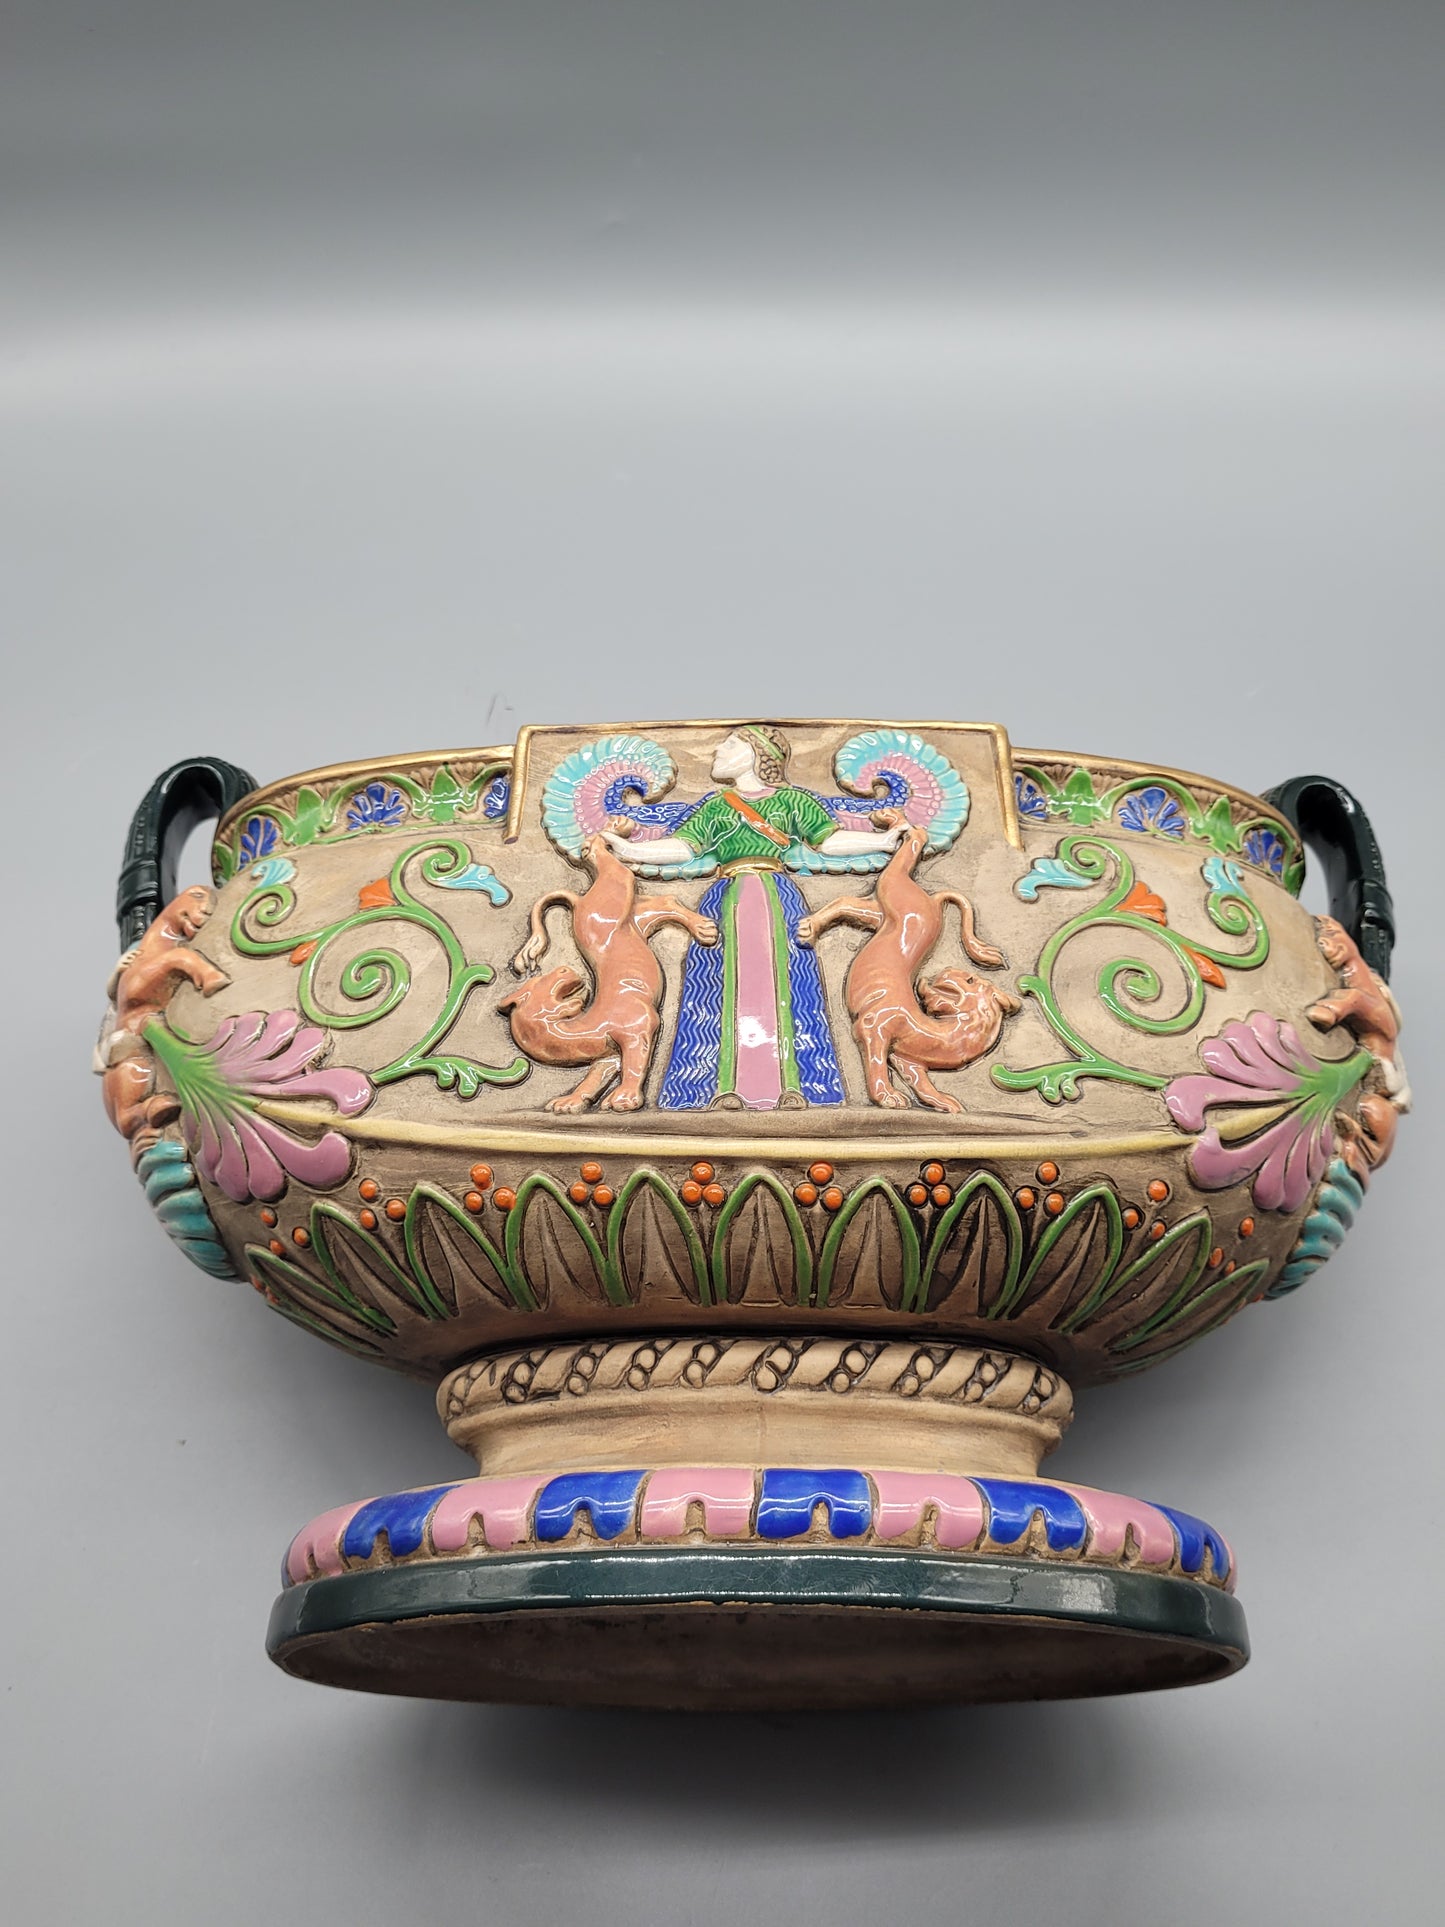 Qing-Dynastie (1644-1911) Antike chinesische Keramik Relief Jardiniere